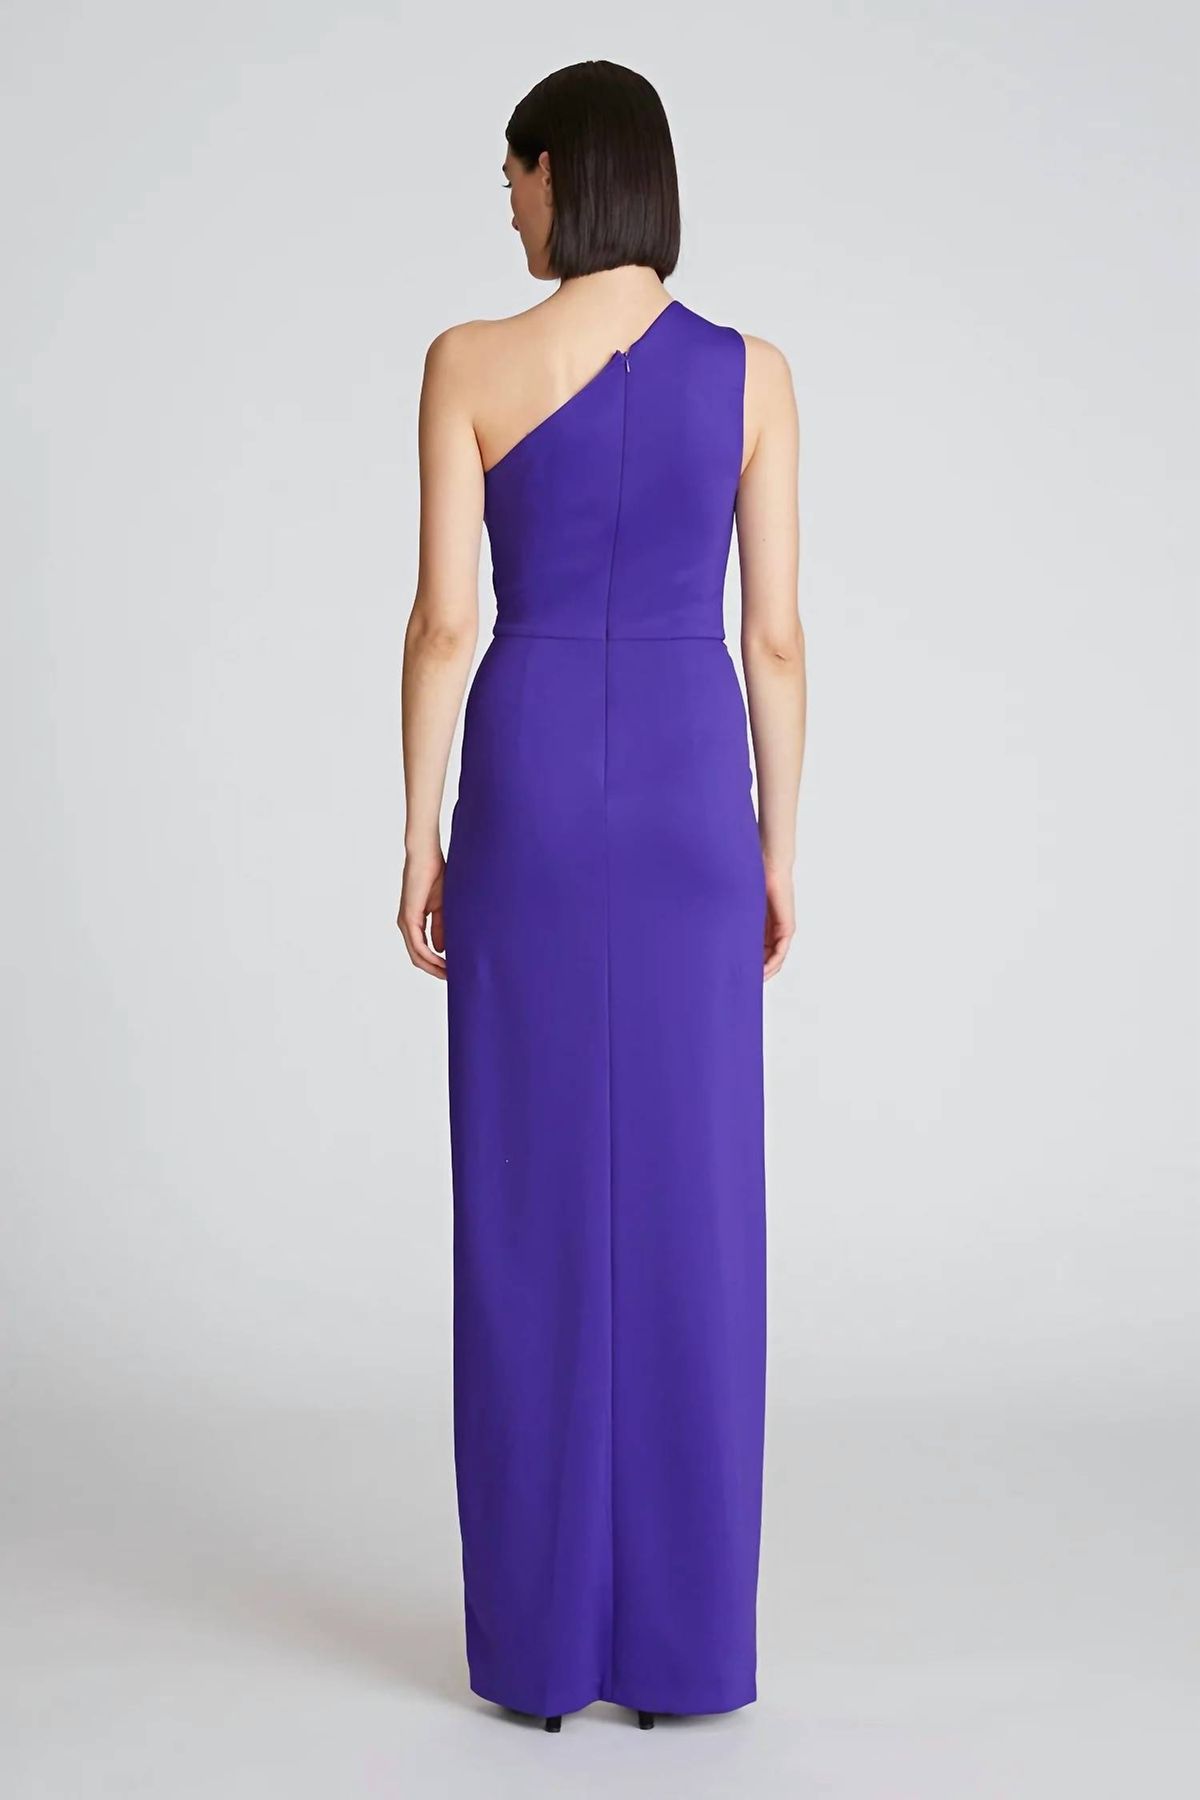 Style 1-3321029914-1498 HALSTON HERITAGE Size 4 One Shoulder Purple Side Slit Dress on Queenly